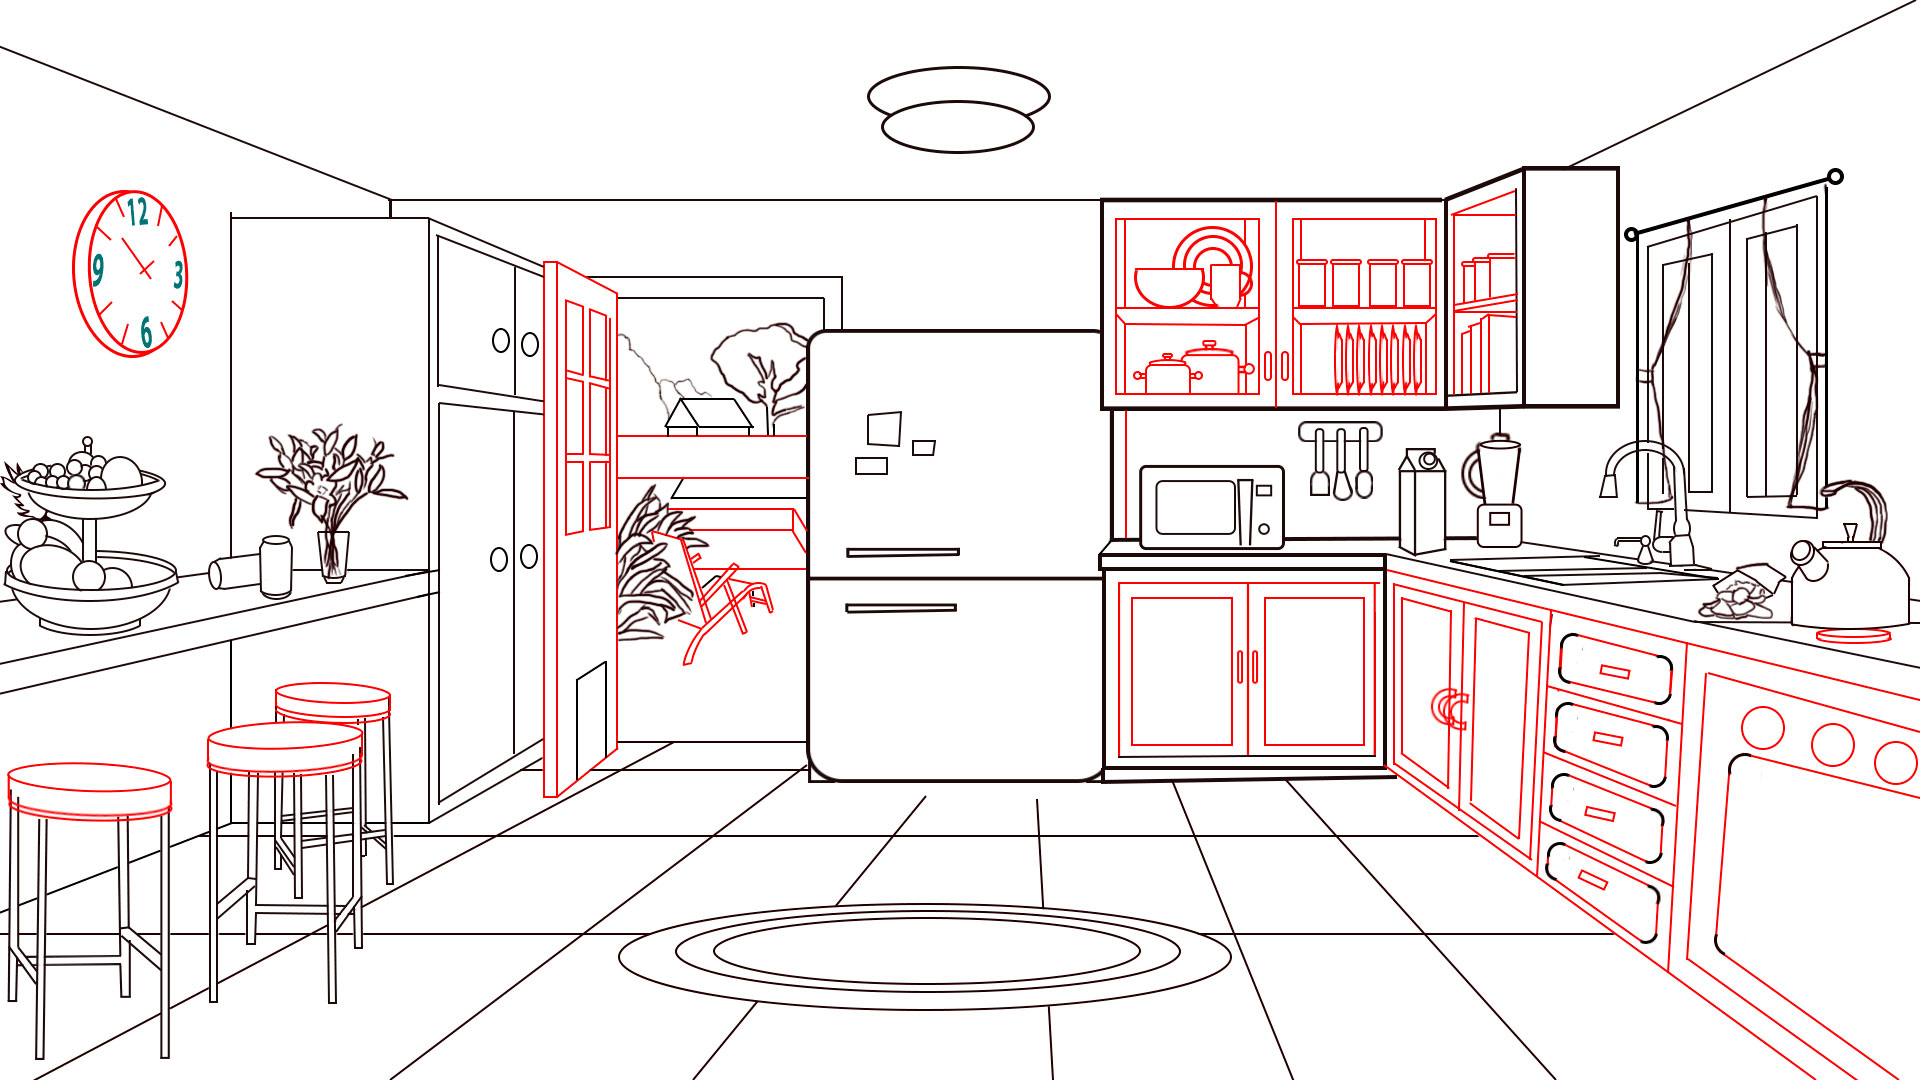 ArtStation - Sketch cenário